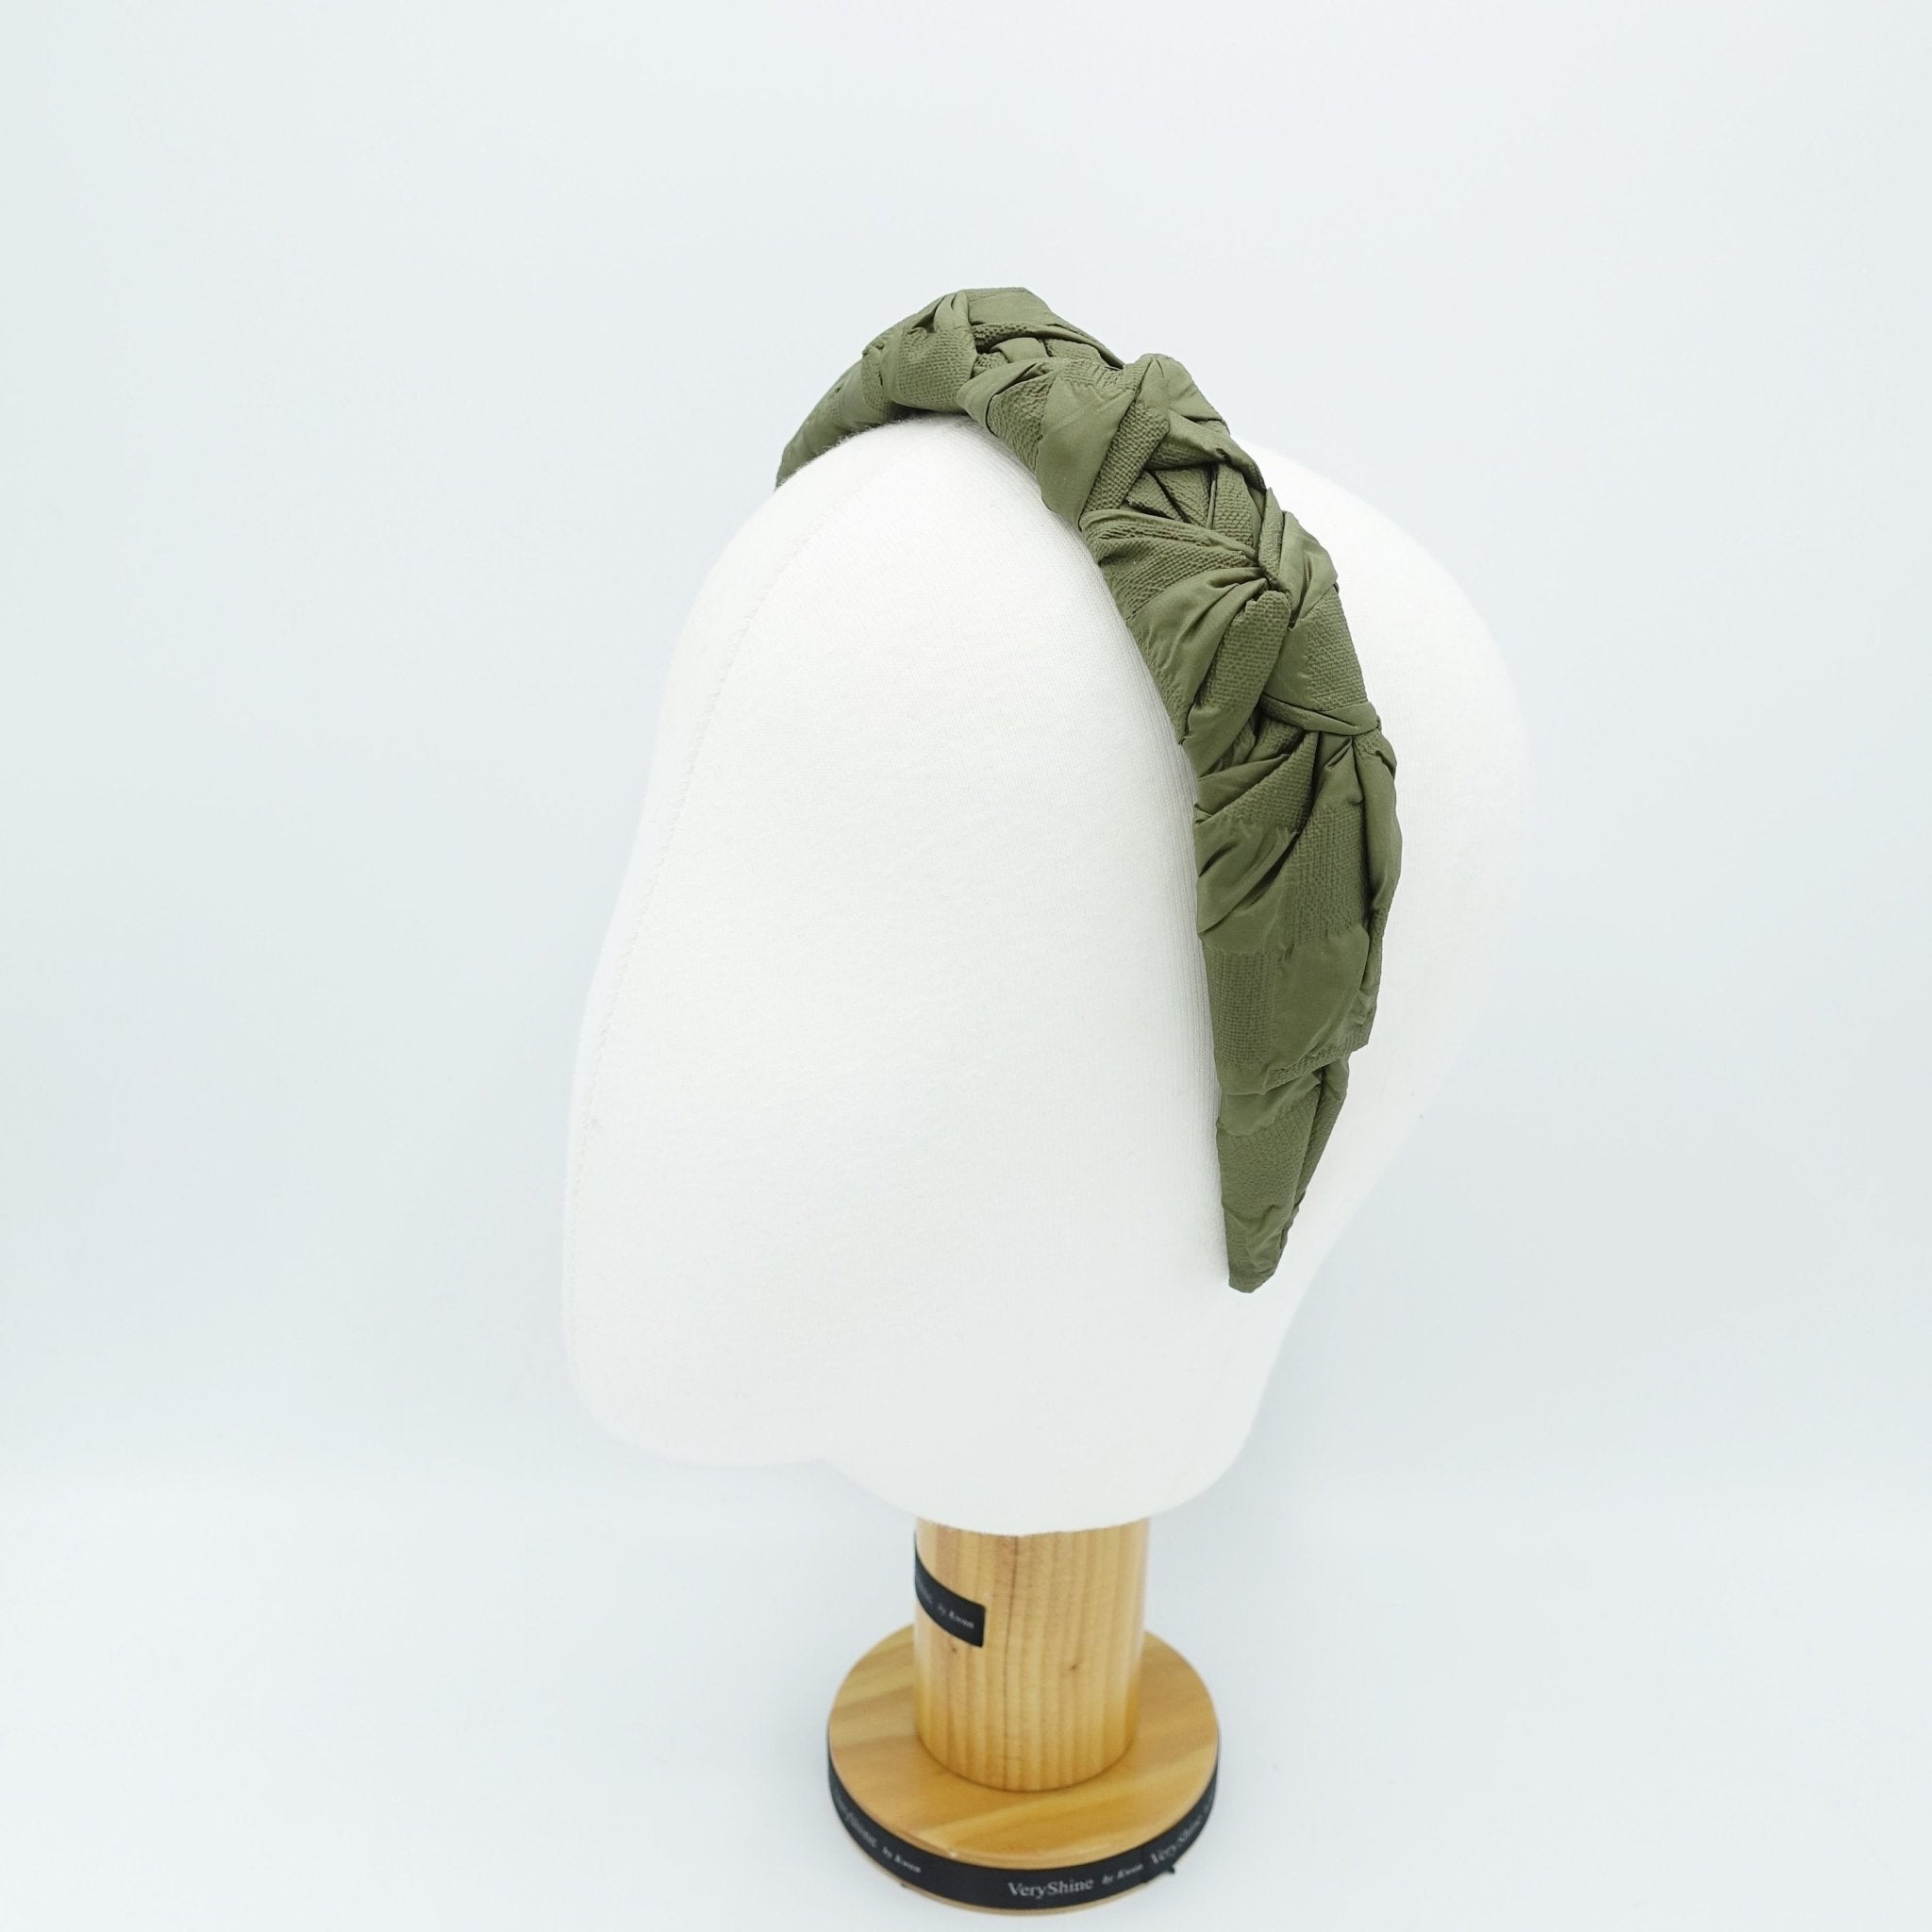 VeryShine padded fabric wrapped multi top knot headband hairband women hair accessory